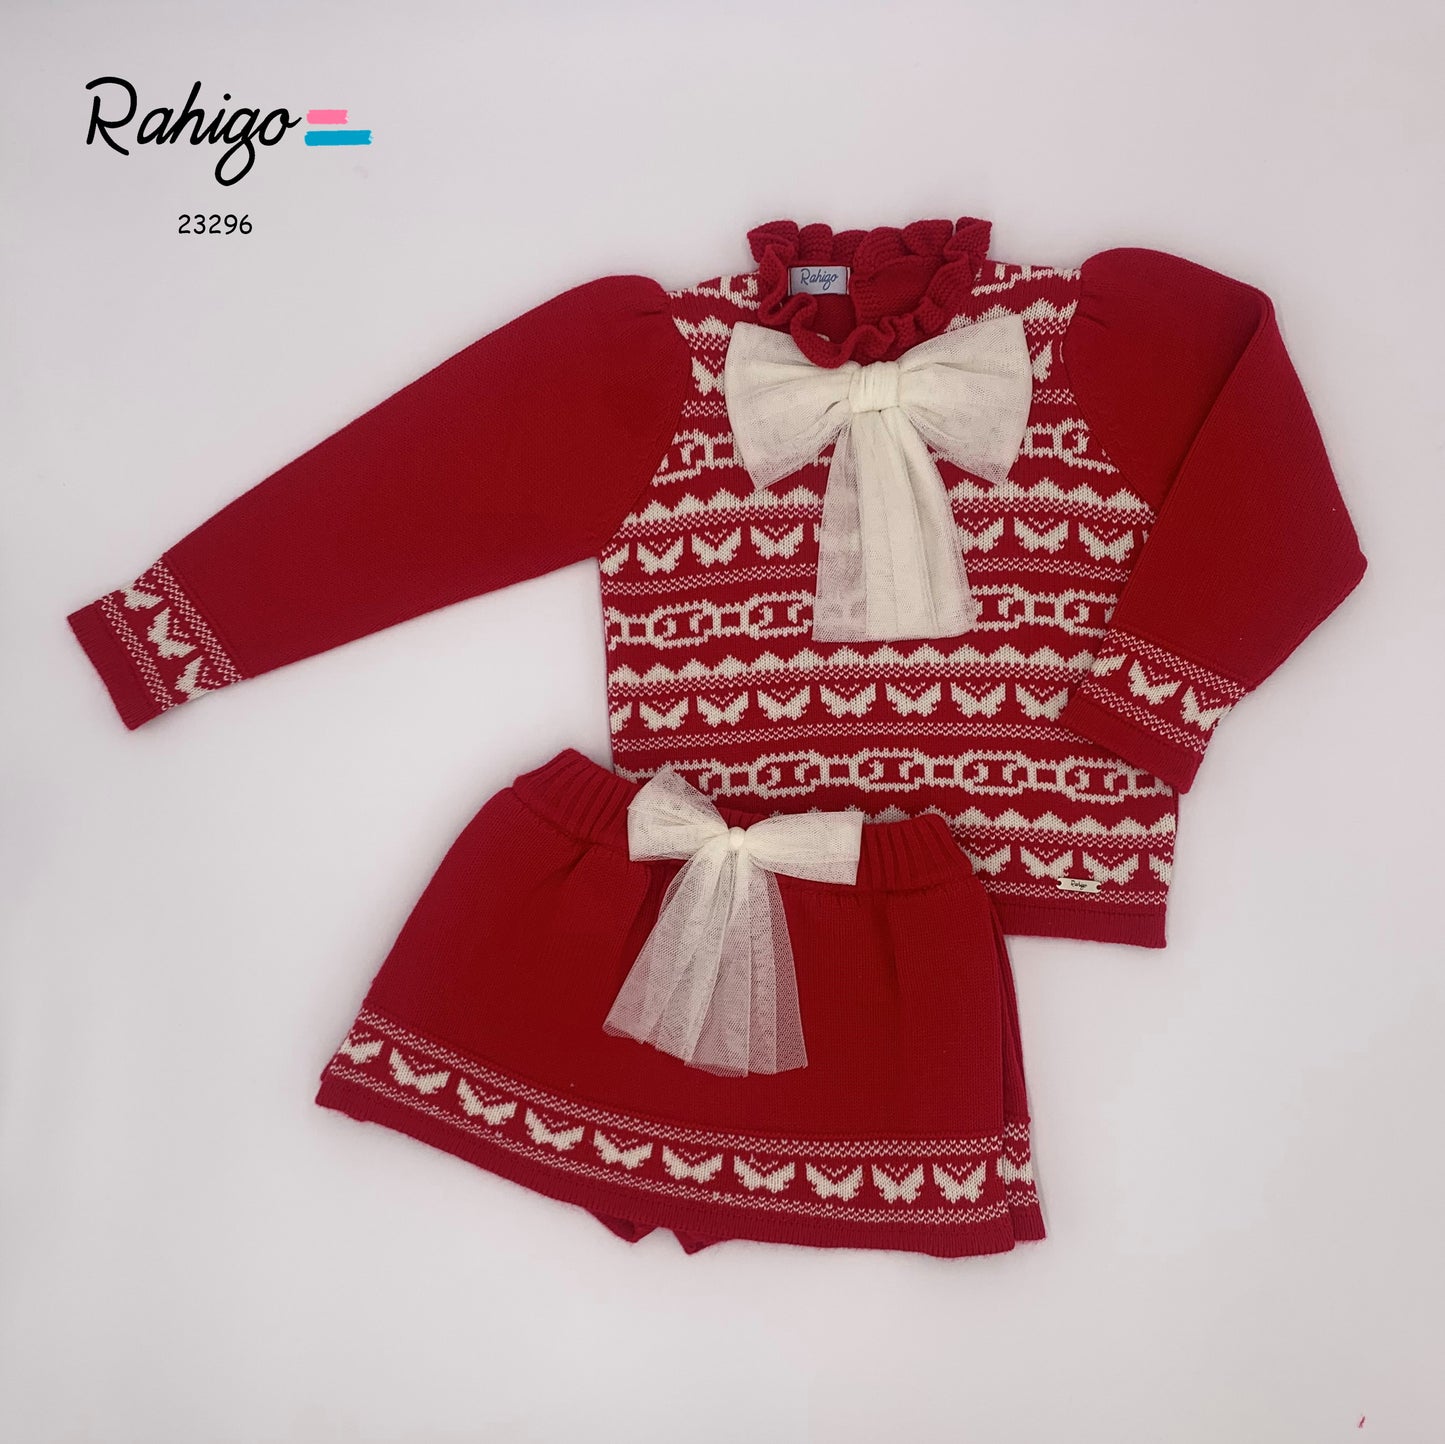 RAHIGO Red & Cream Girls Skort Set - 23296